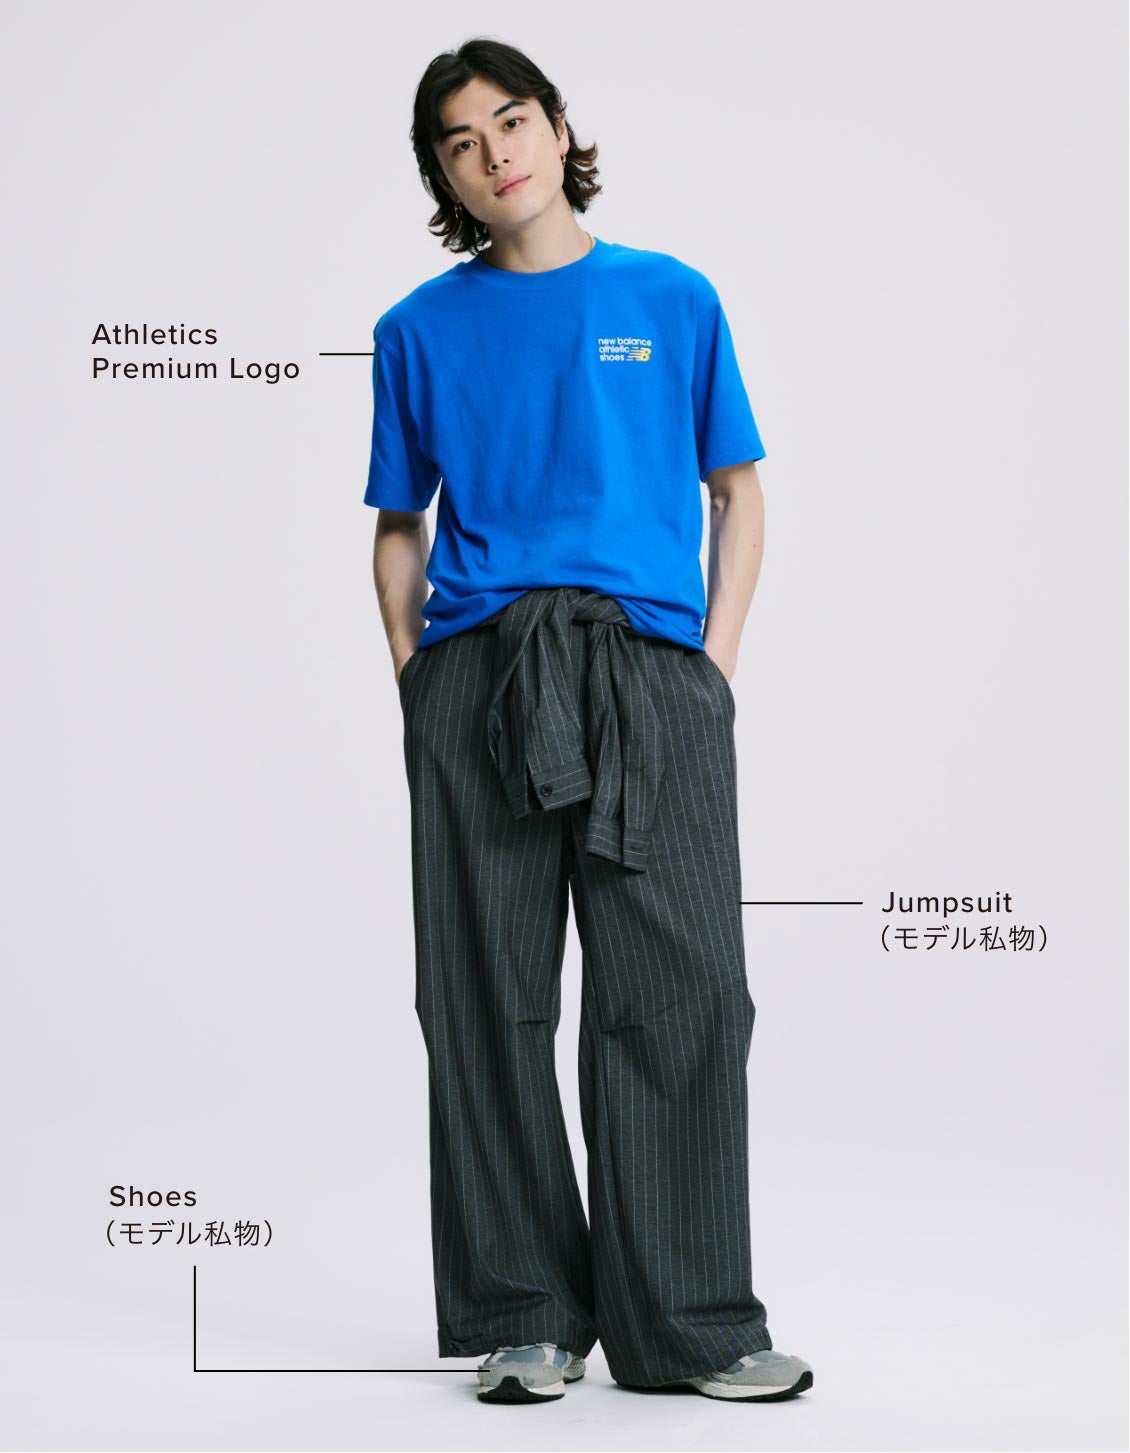 Takuro Kusunoki コーディネート詳細 Tシャツ:Athletics Premium Logo, Pants:Jumpsuit(モデル私物), Shoes:モデル私物